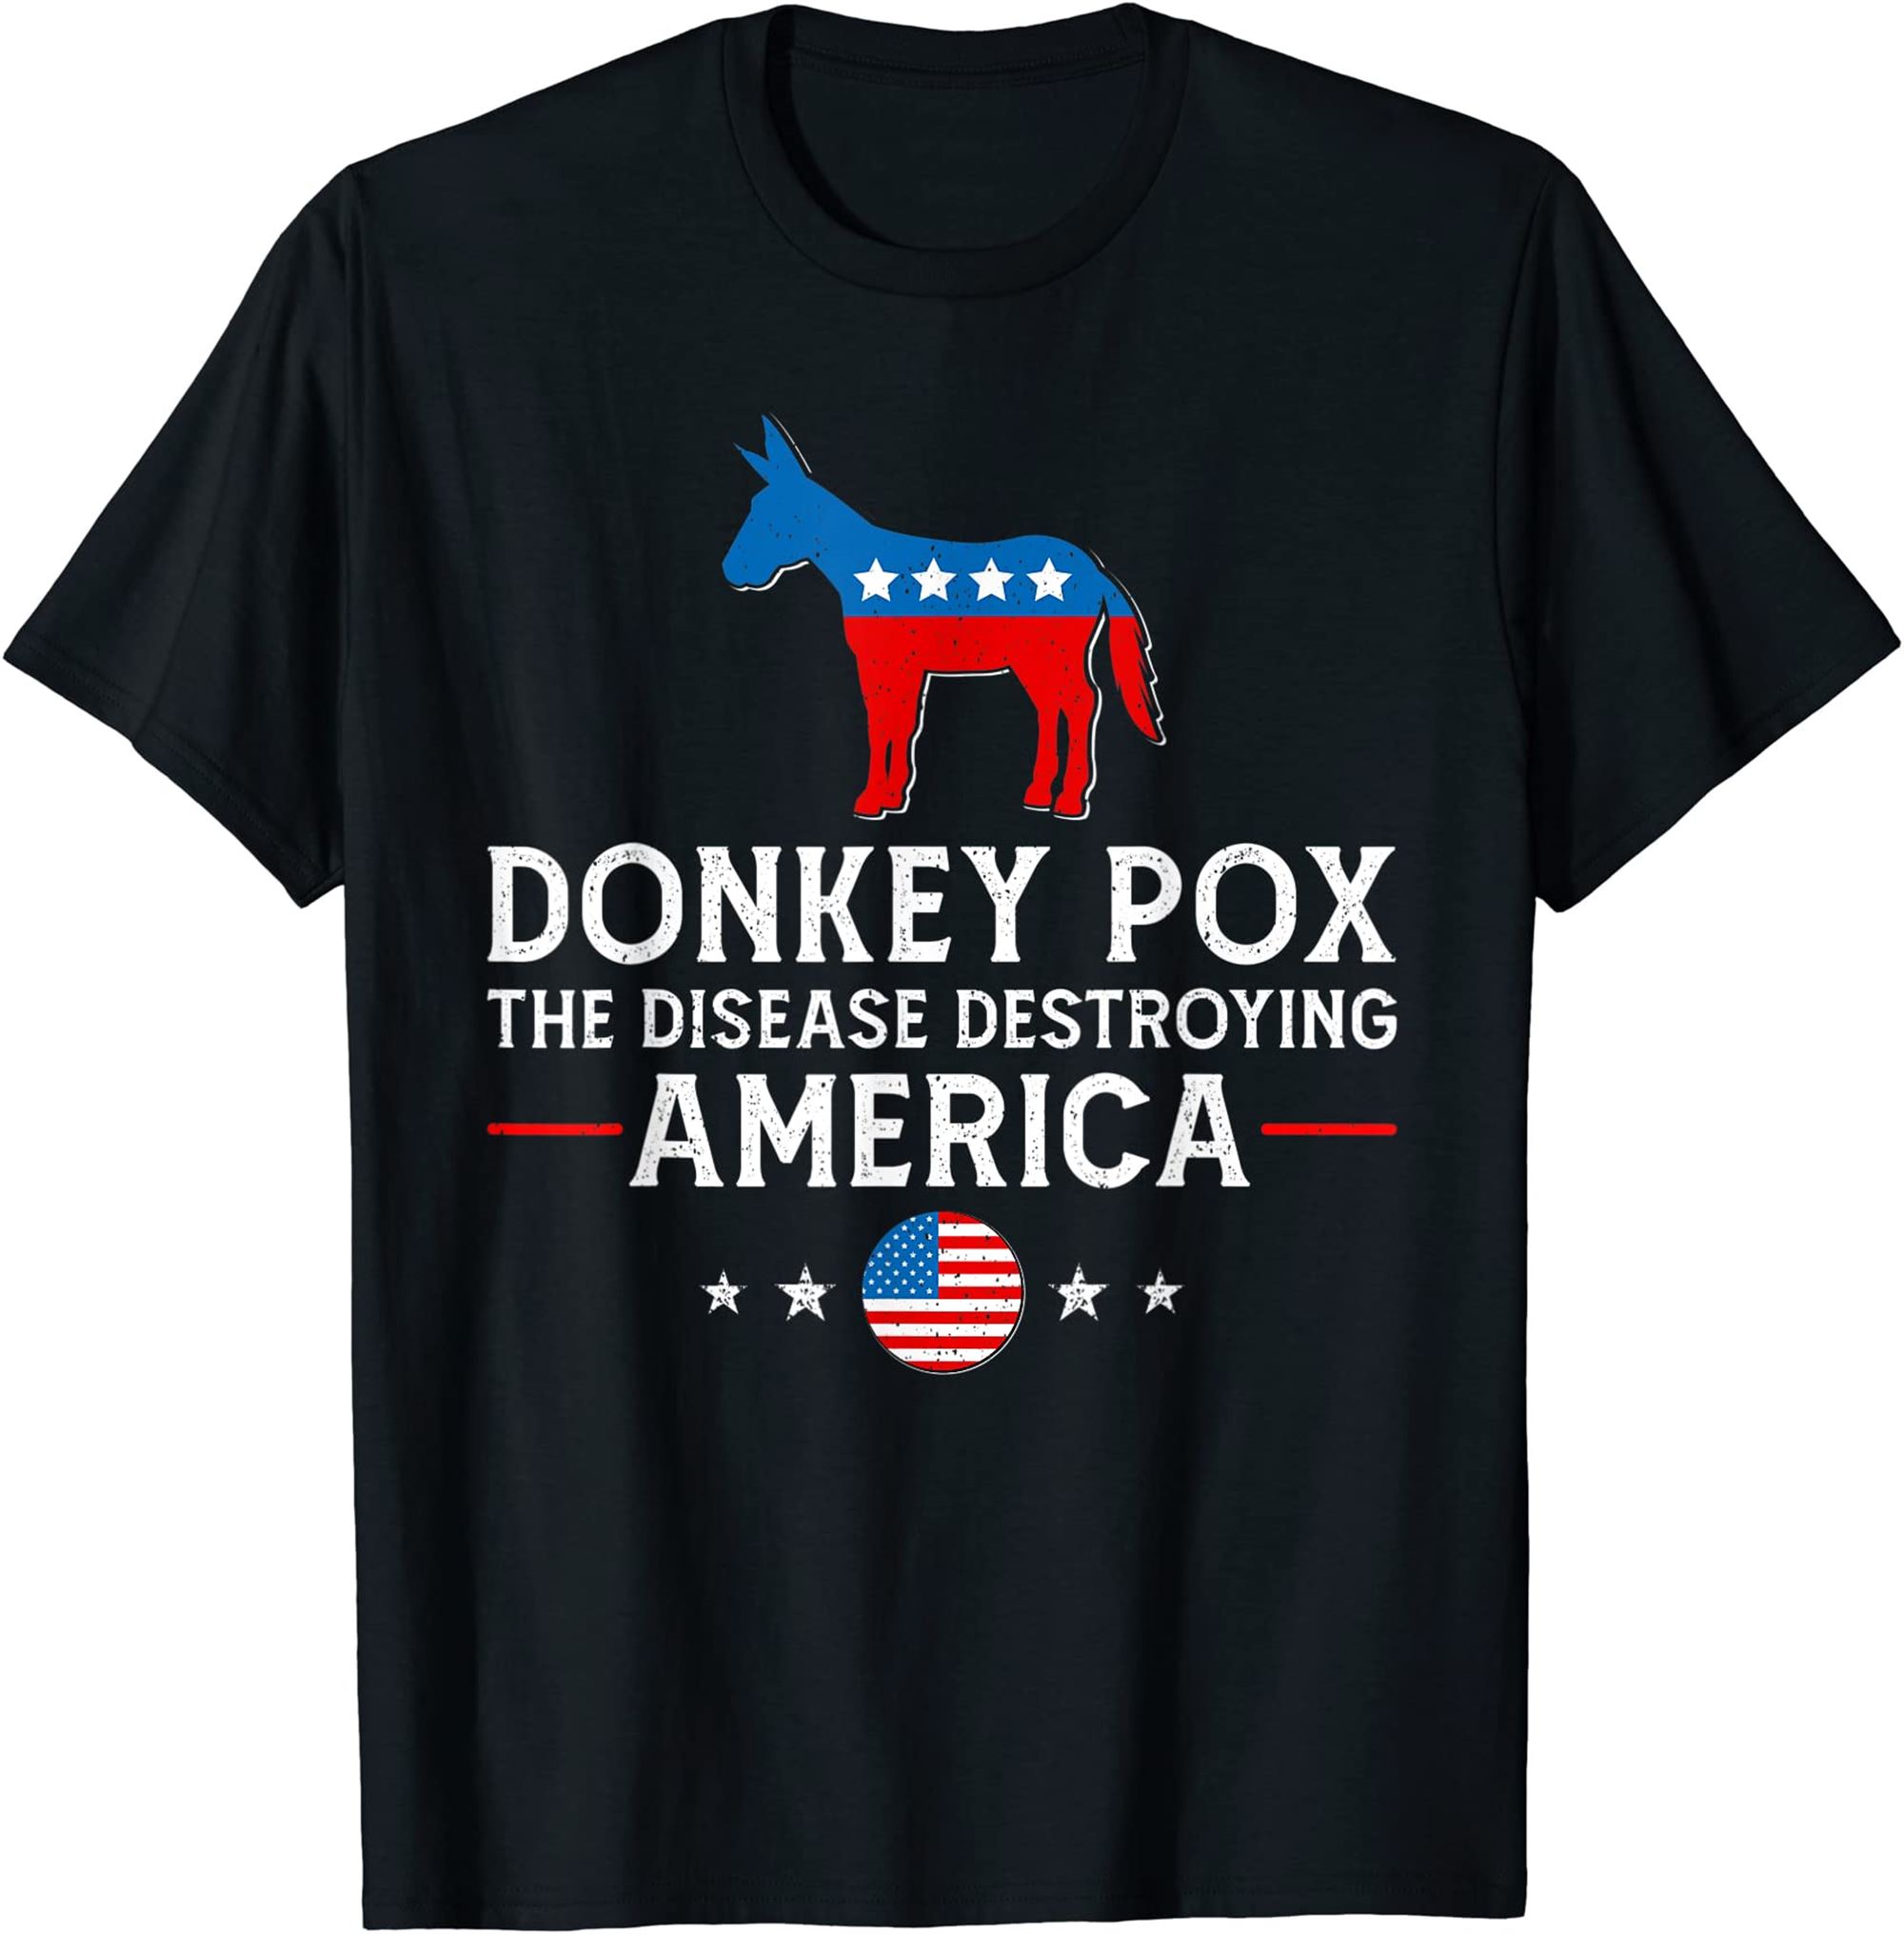 Donkey Pox Disease Destroying America Funny Anti Joe Biden T-shirt Full Size Up To 5xl